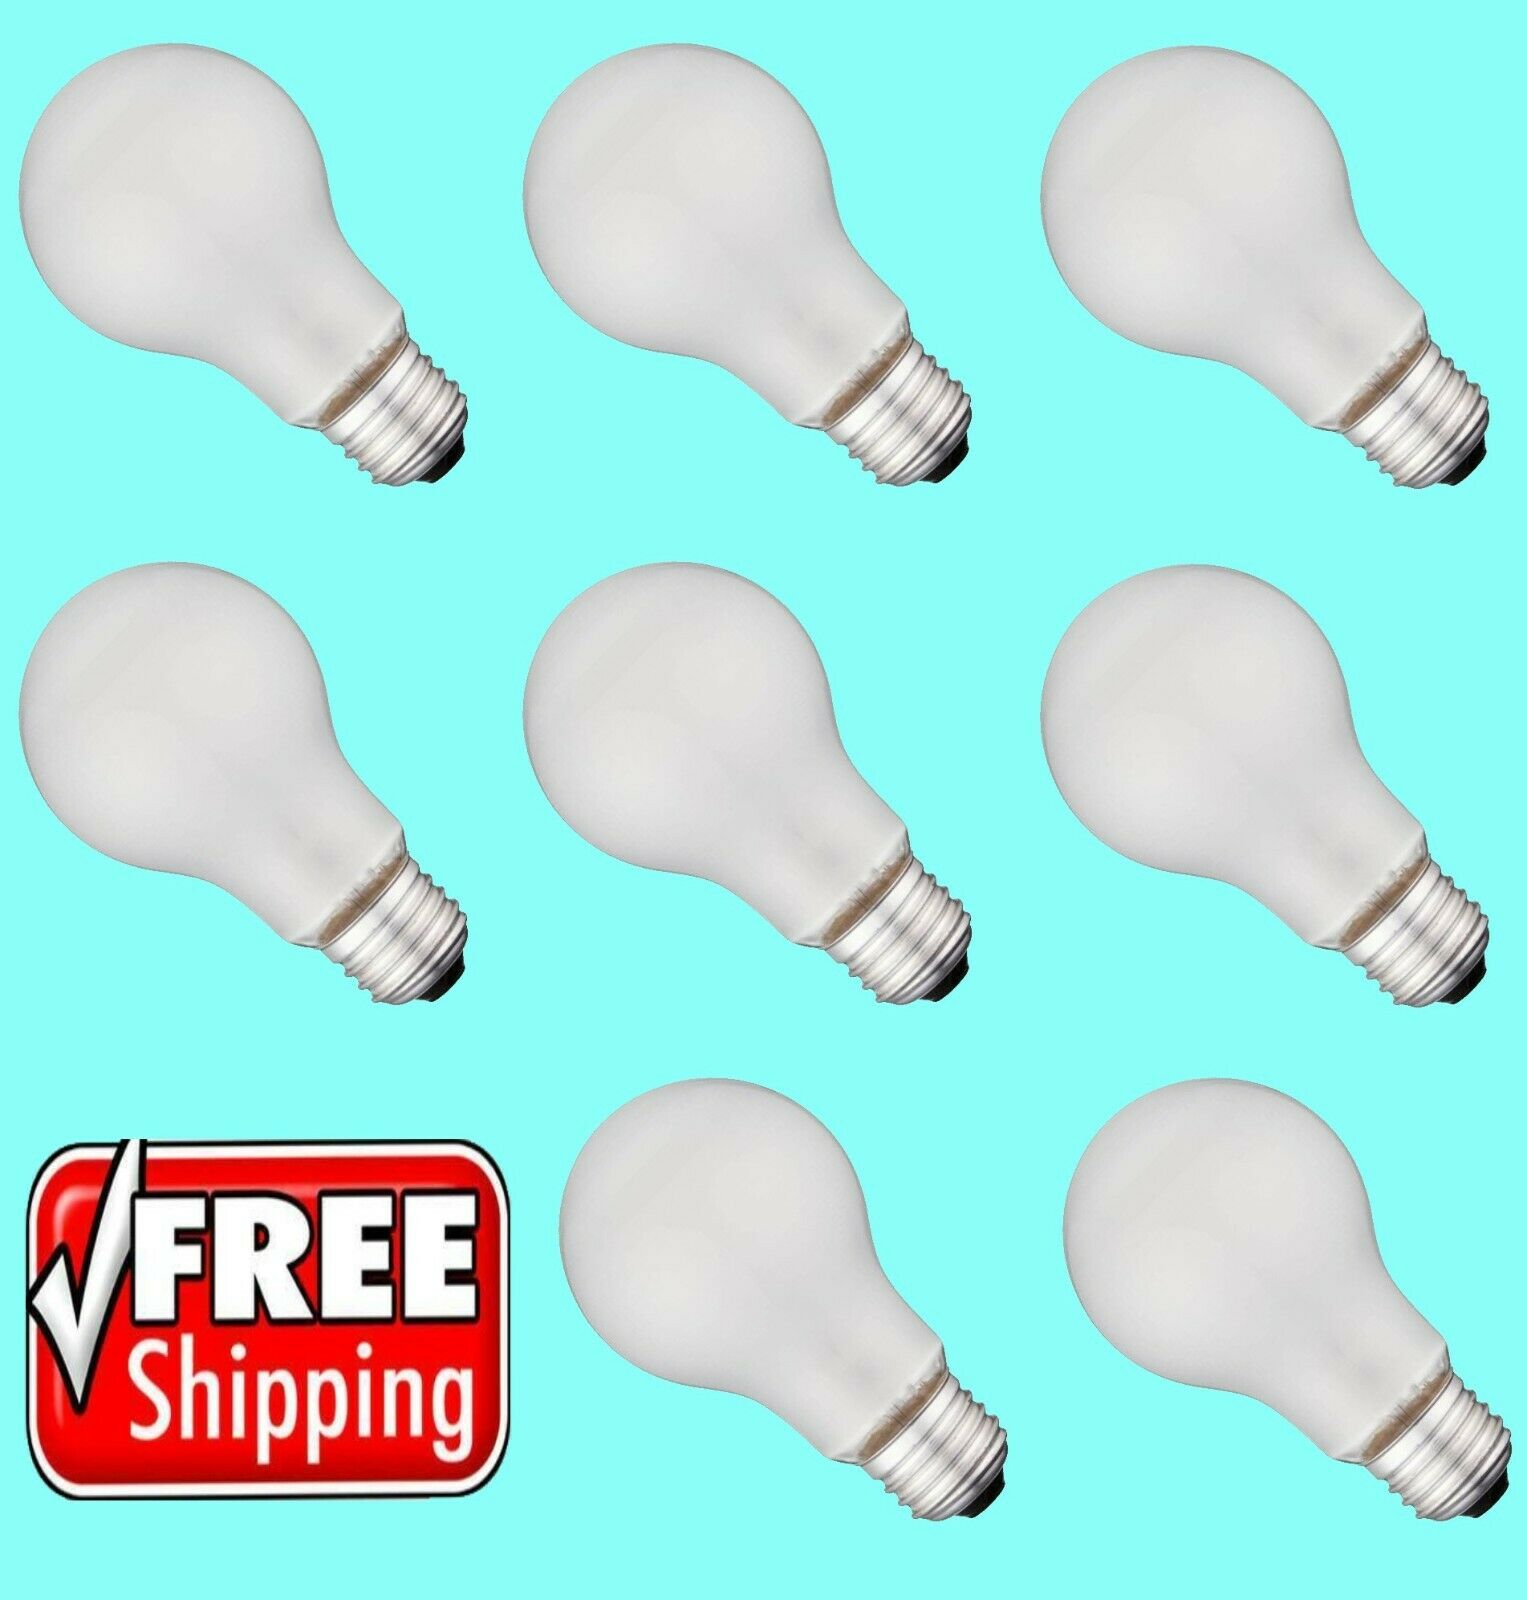 Incandescent Light Bulbs 100 Watt 75 Watt 60 Watt 40 Watt Soft White - 8 Bulbs